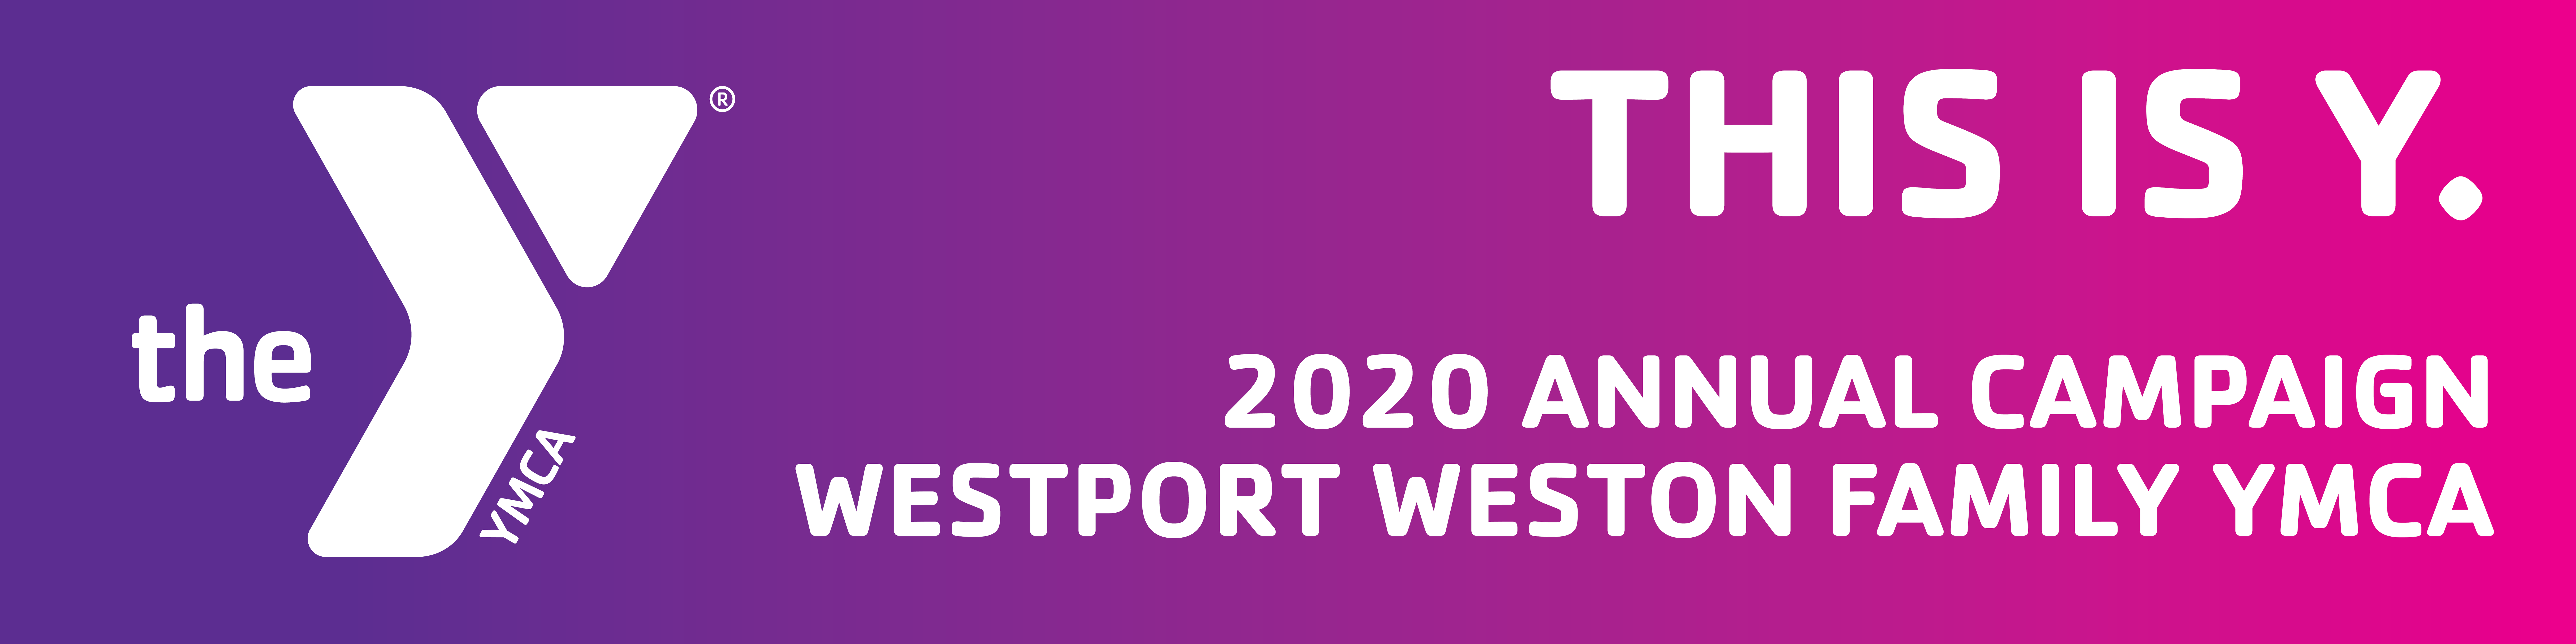 Westport Weston Family Ymca Annual Campaign